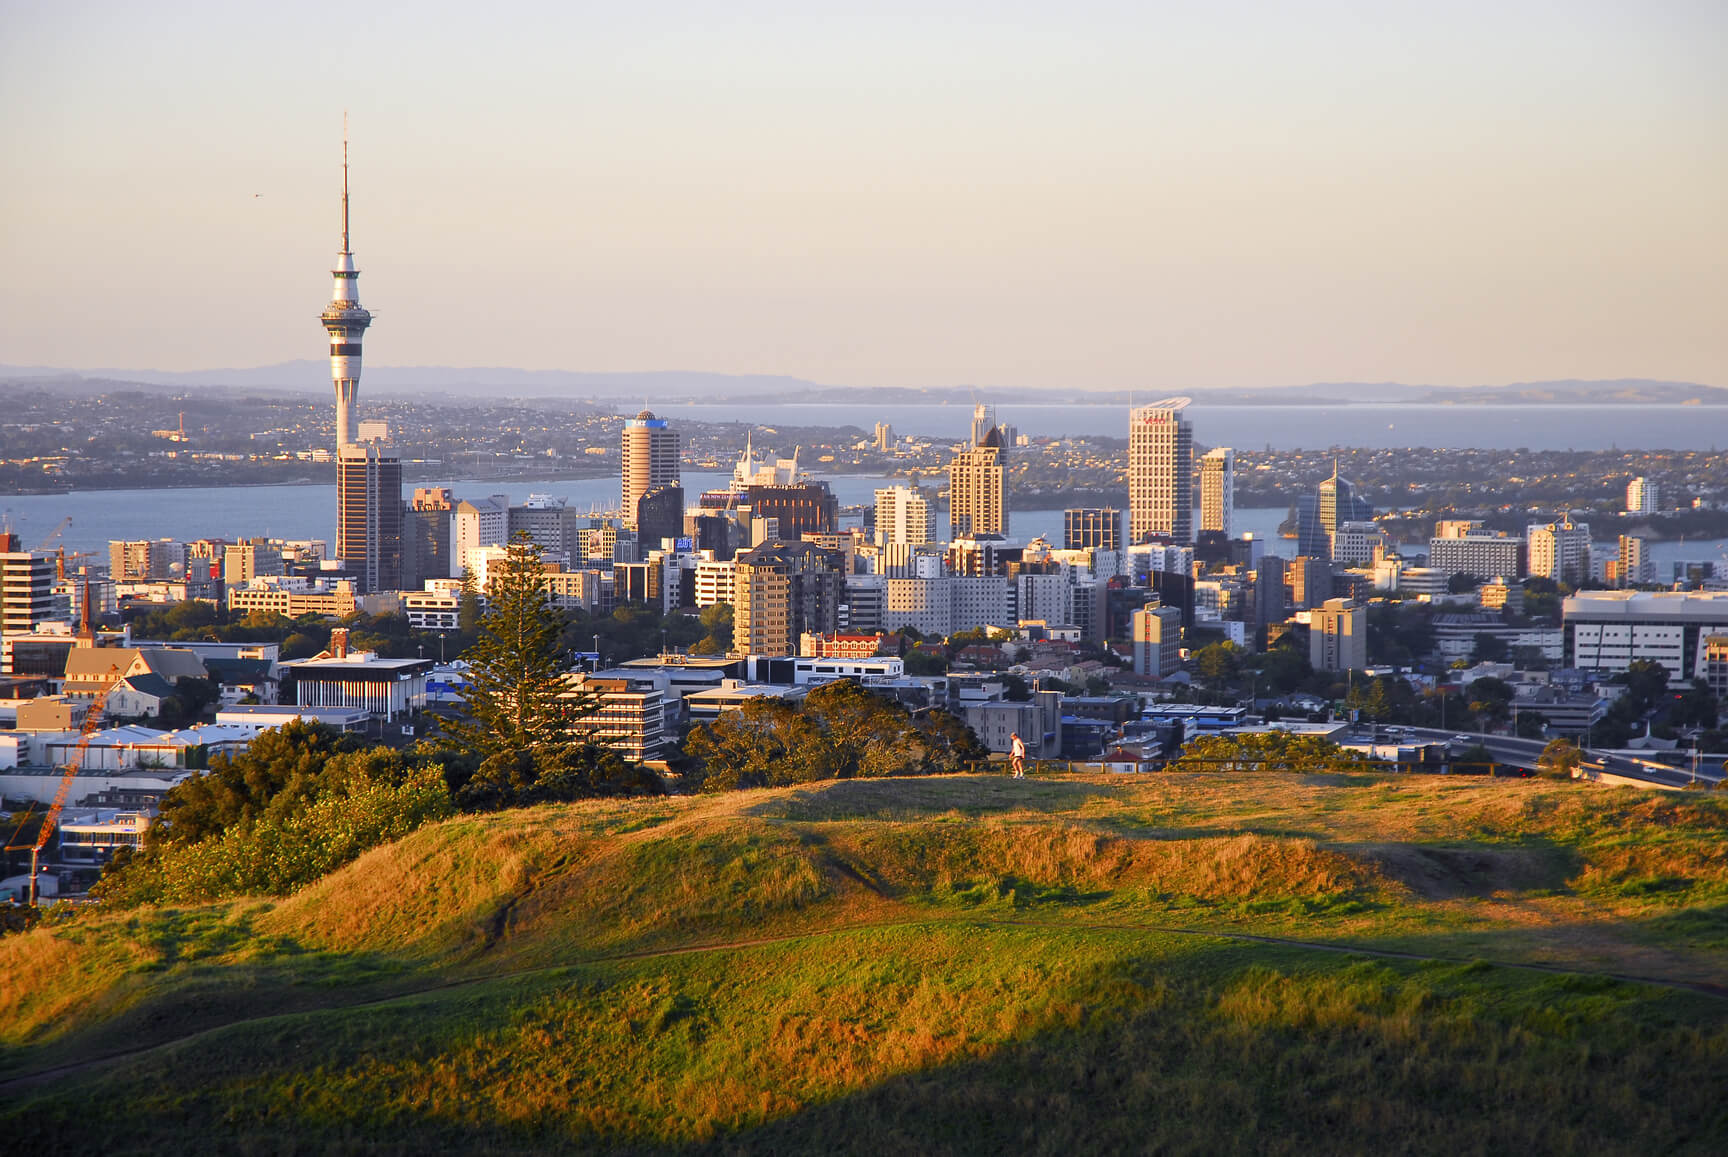 Flight deals from London, UK to Auckland, New Zealand | Secret Flying